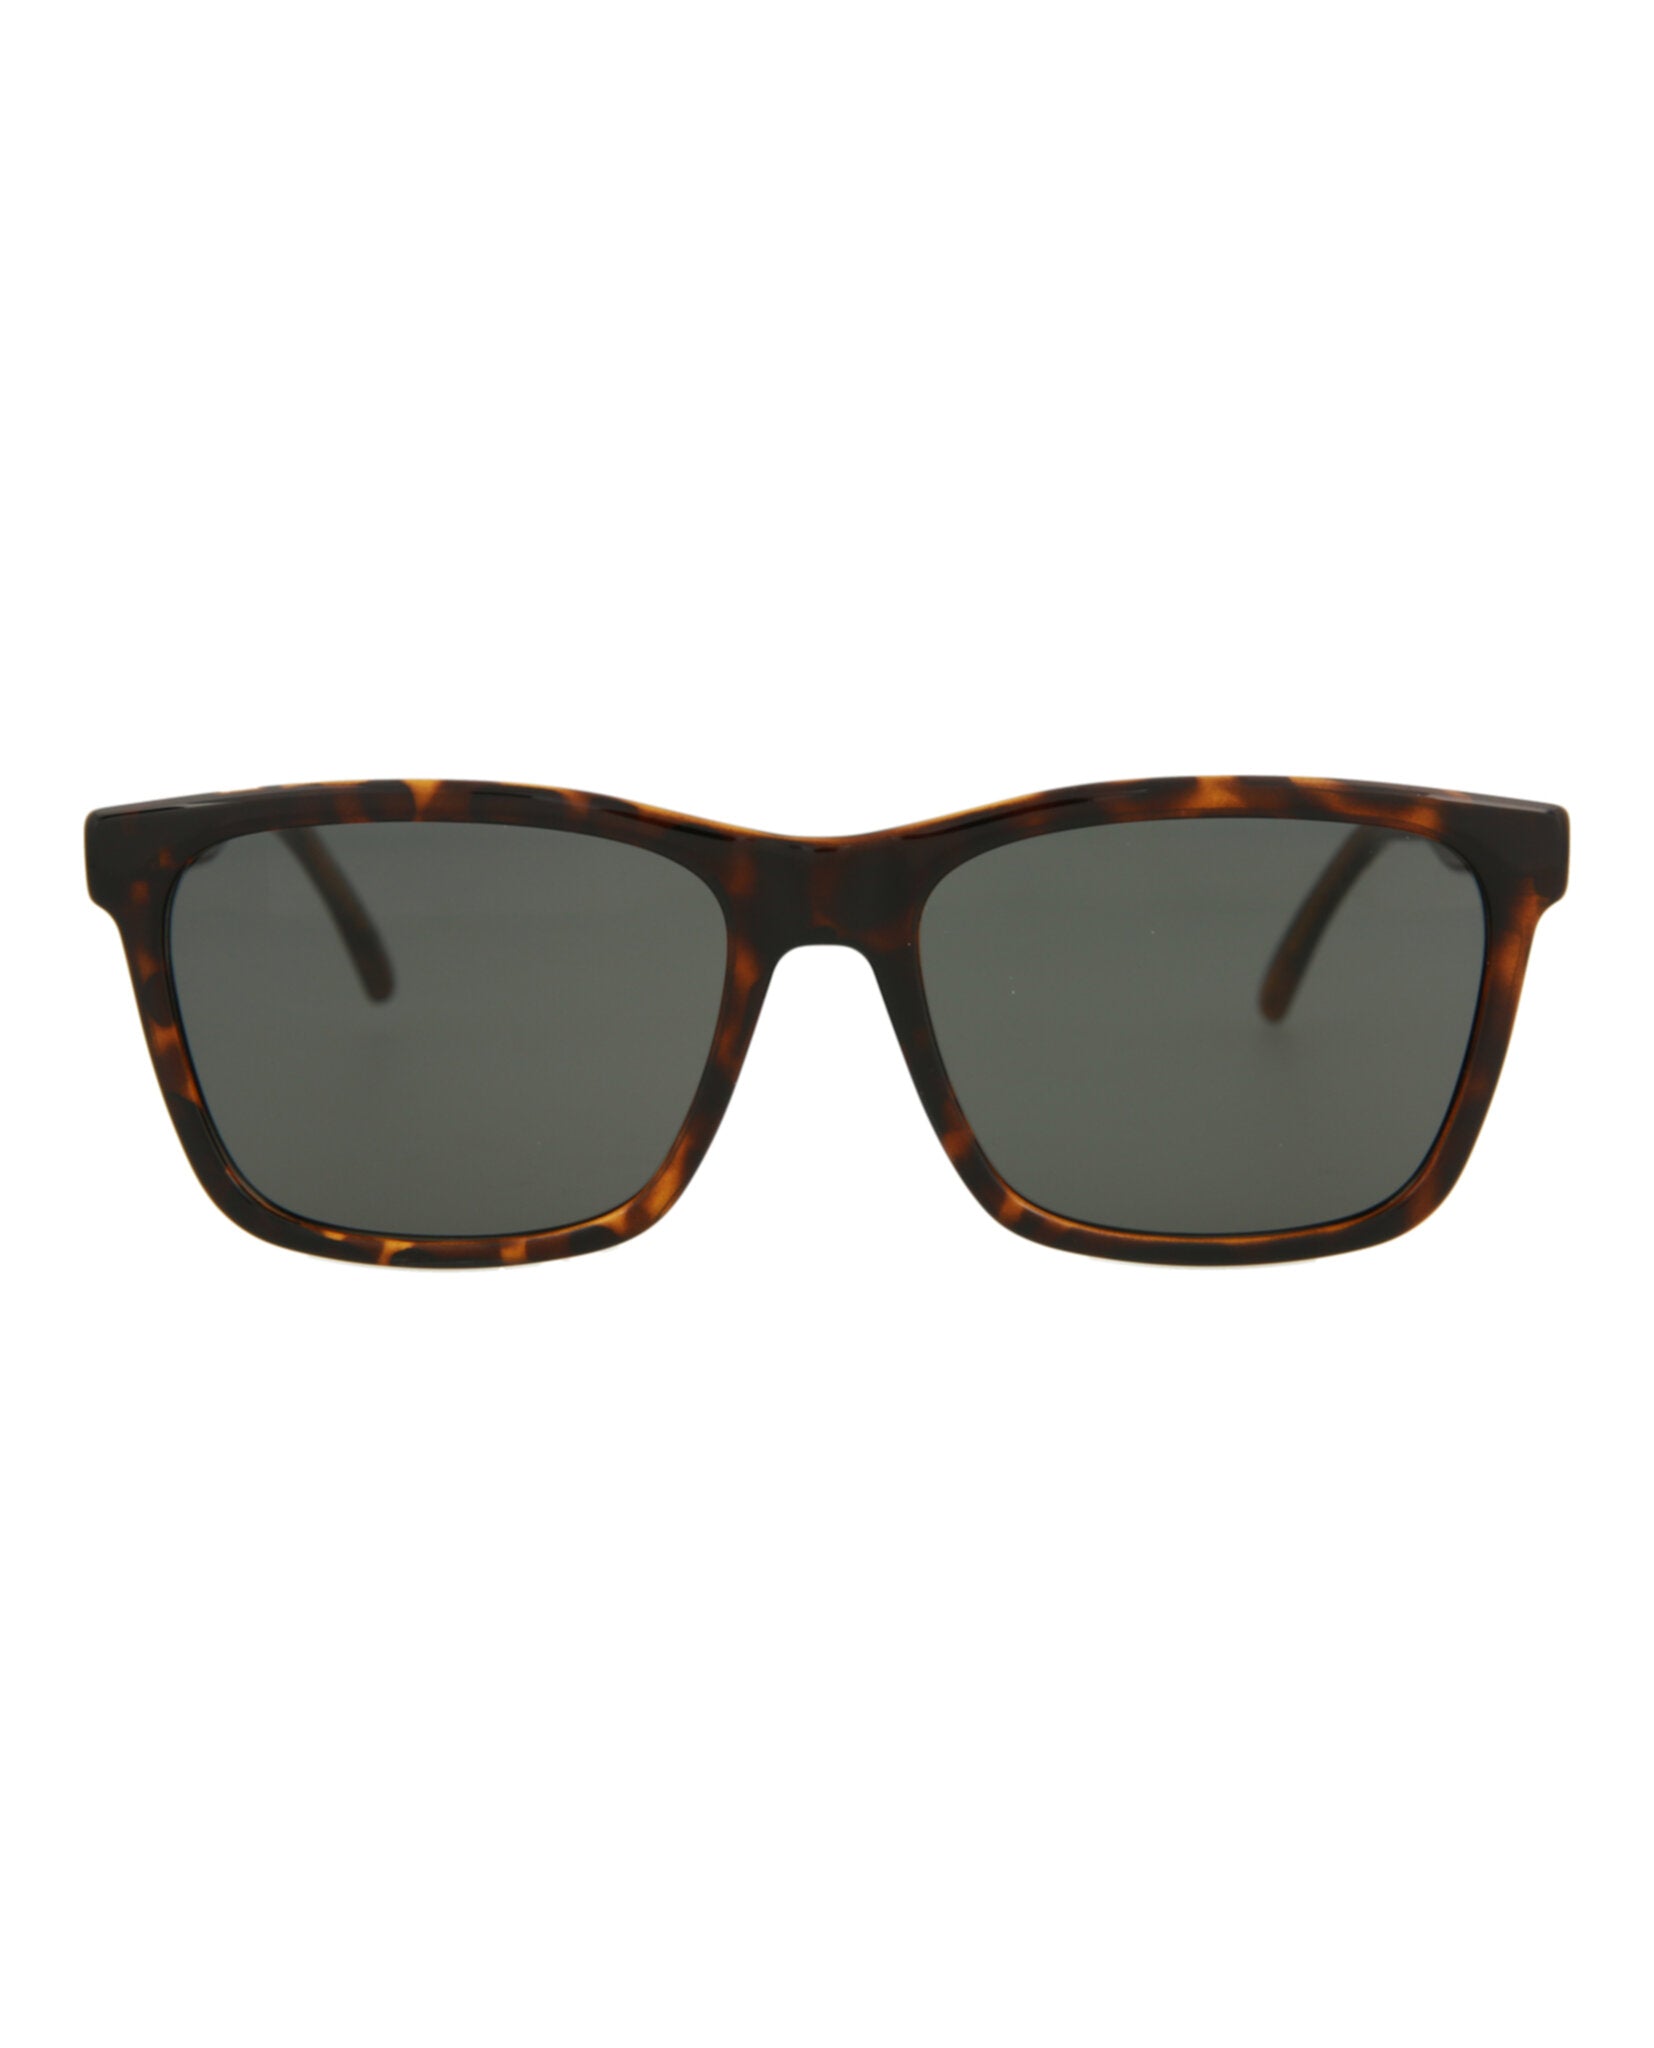 Saint Laurent Best Sunglasses Style # Style #SL318-3 - Ruumur